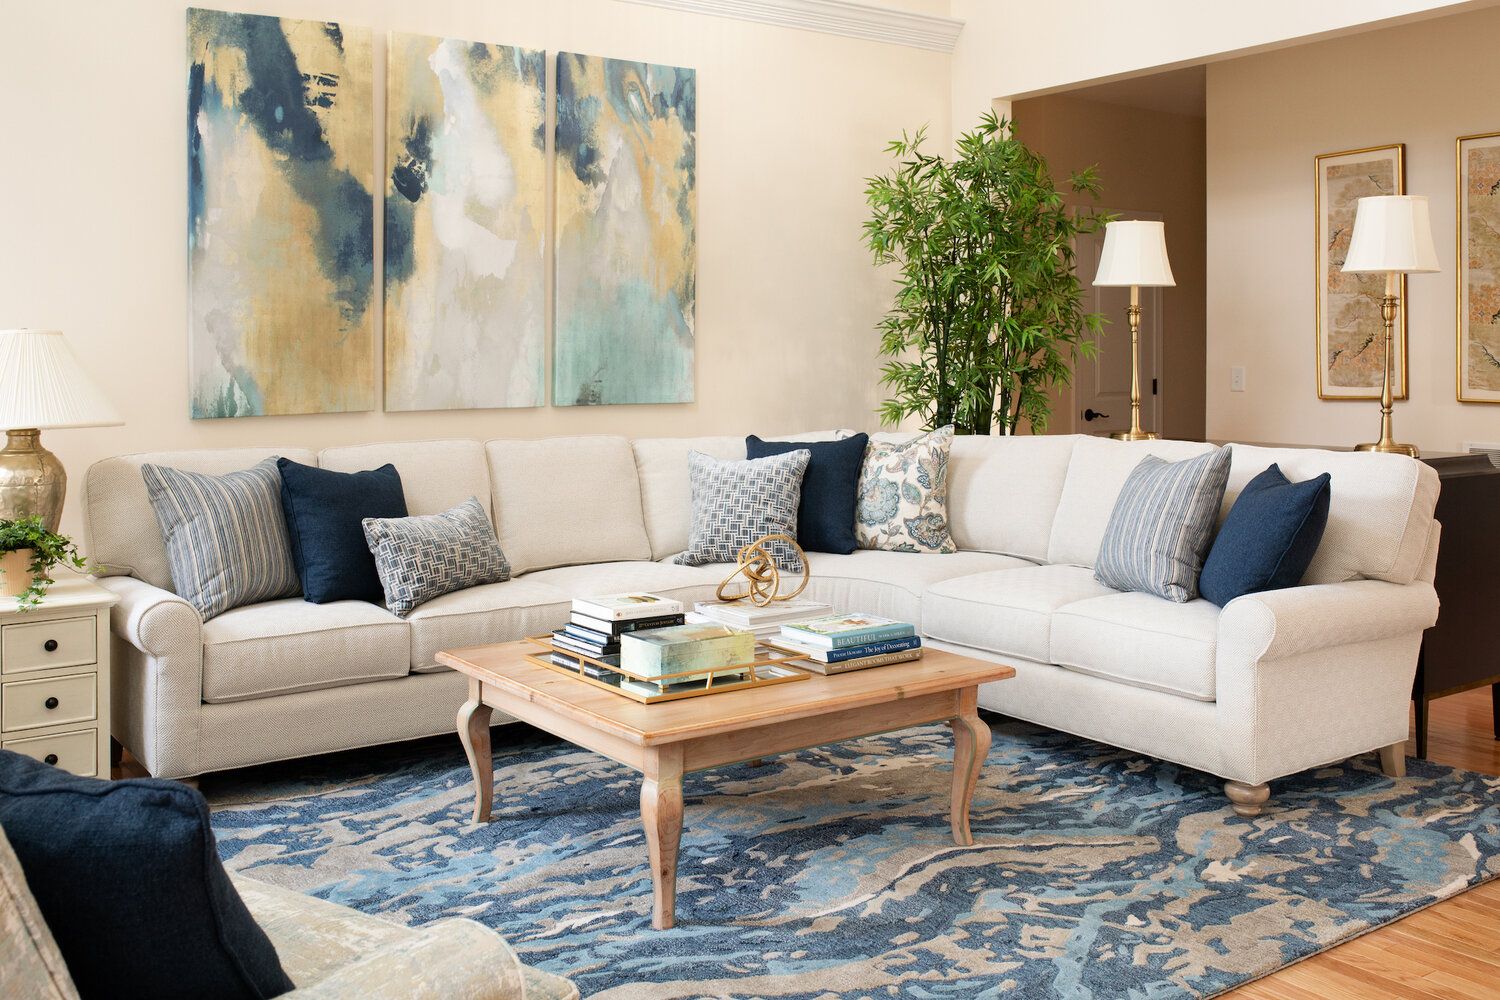 How To Arrange Cushions On L-Shaped Sofa